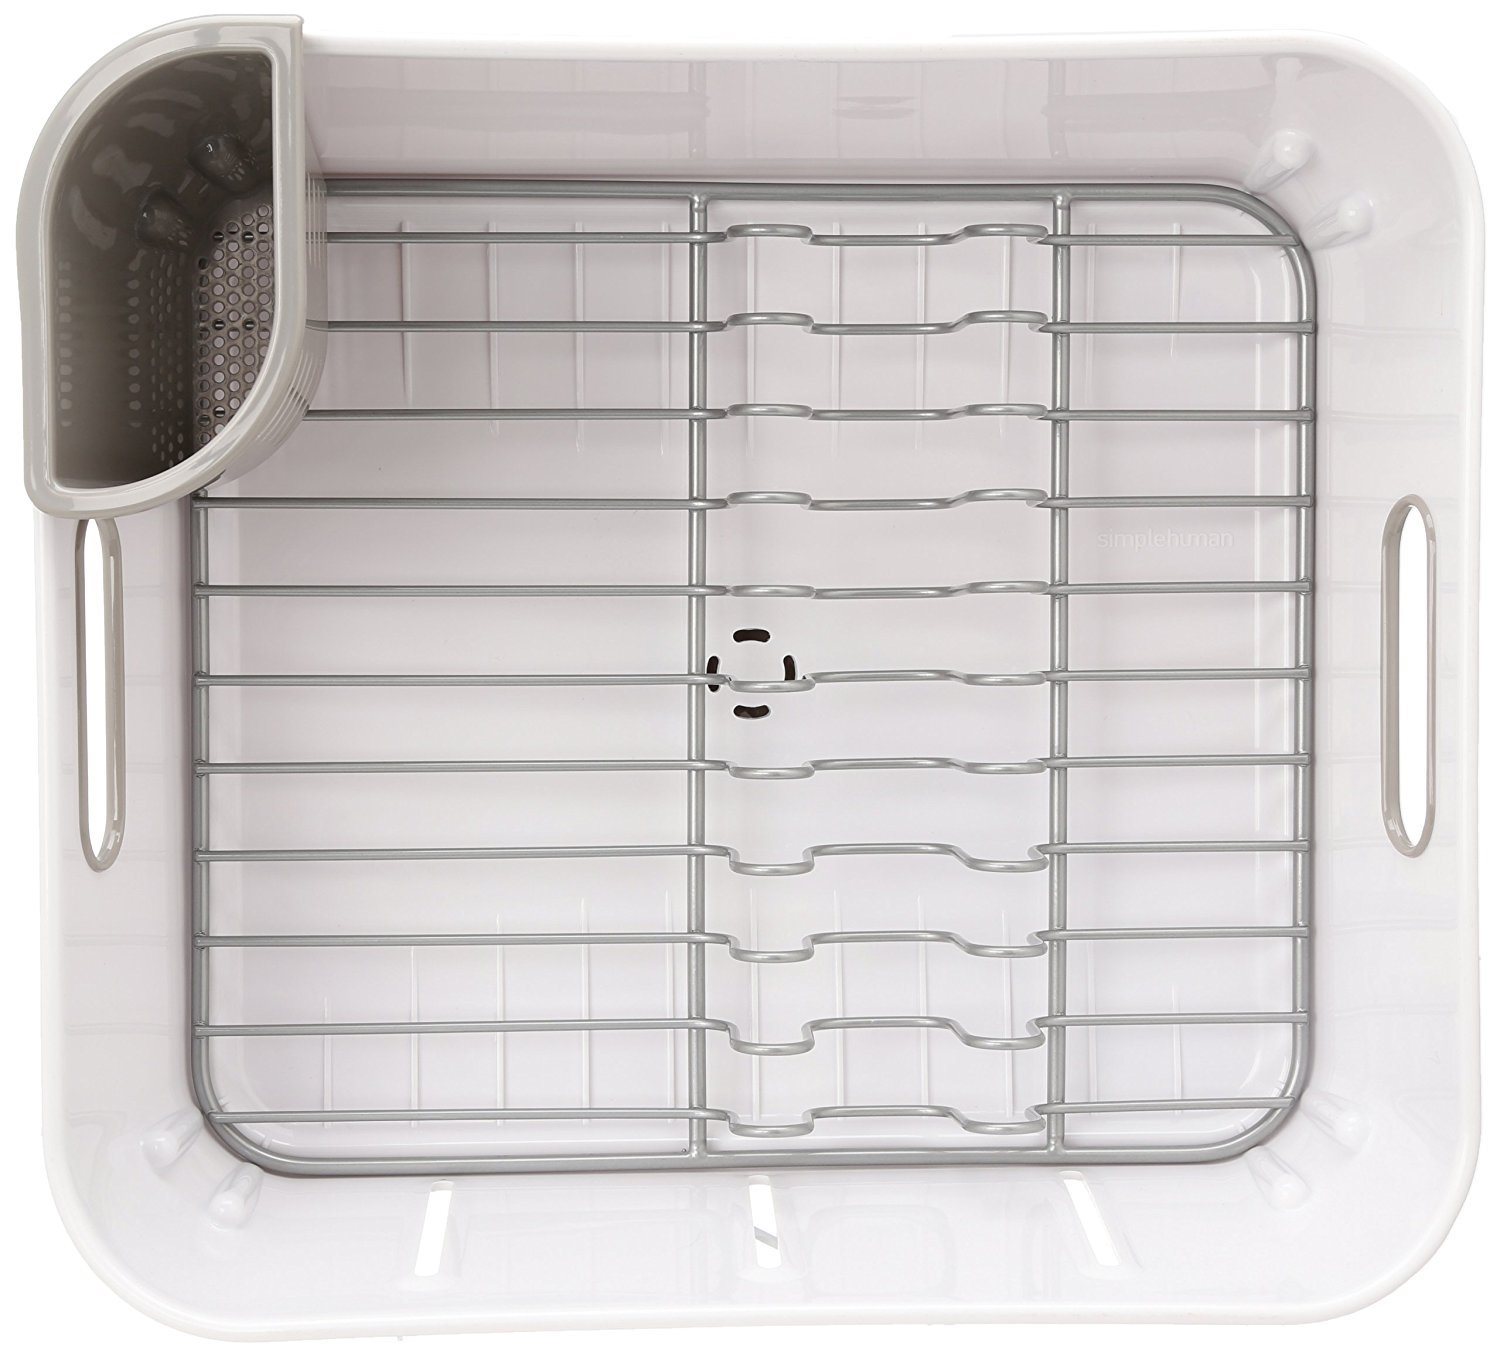 Dish drying rack, 37 x 32.6 x 17.2 cm - simplehuman